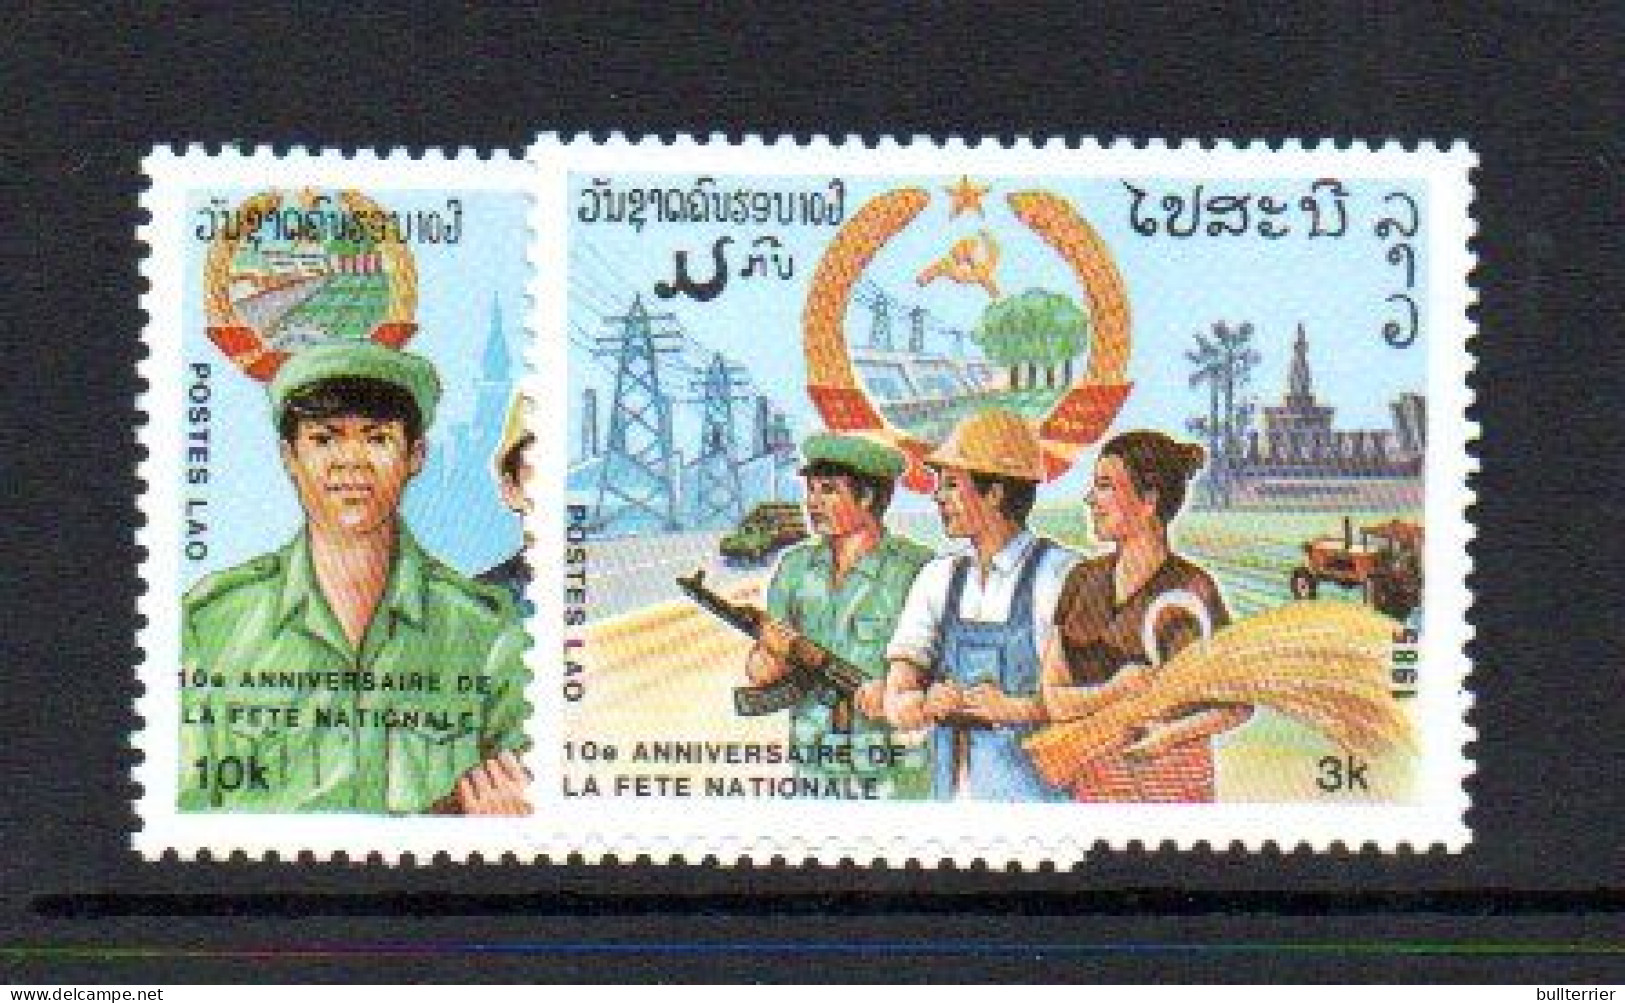 LAOS - 1985 - REPUBLIC ANNIVERSARY SET OF 2  MINT NEVER HINGED - Laos